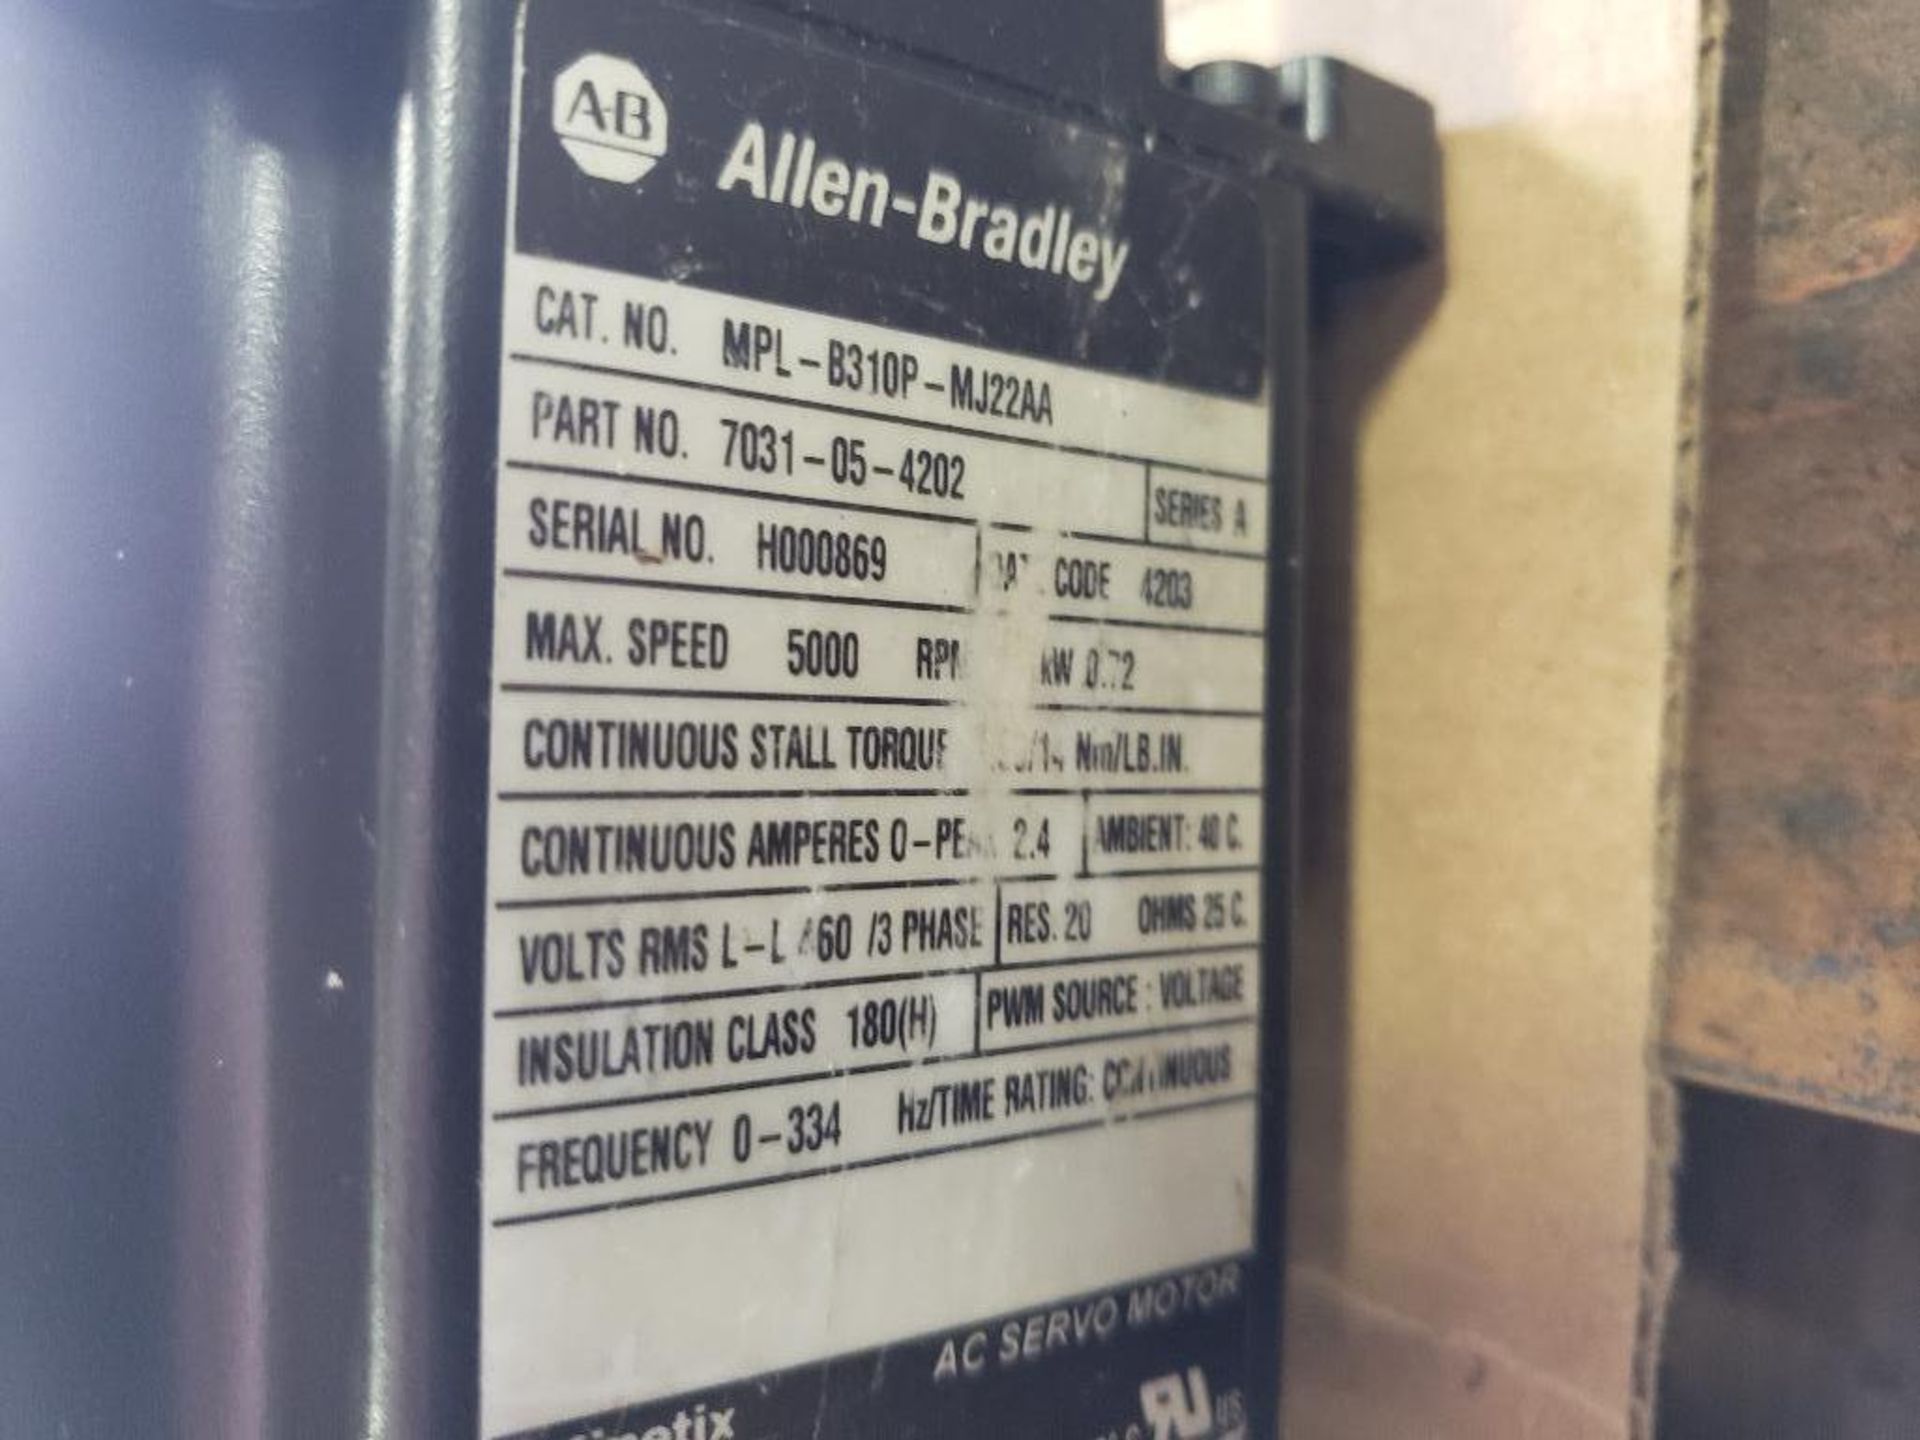 Allen Bradley MPL-B310P-MJ22AA servo motor. 5000RPM, 3PH, 460V. - Image 2 of 2